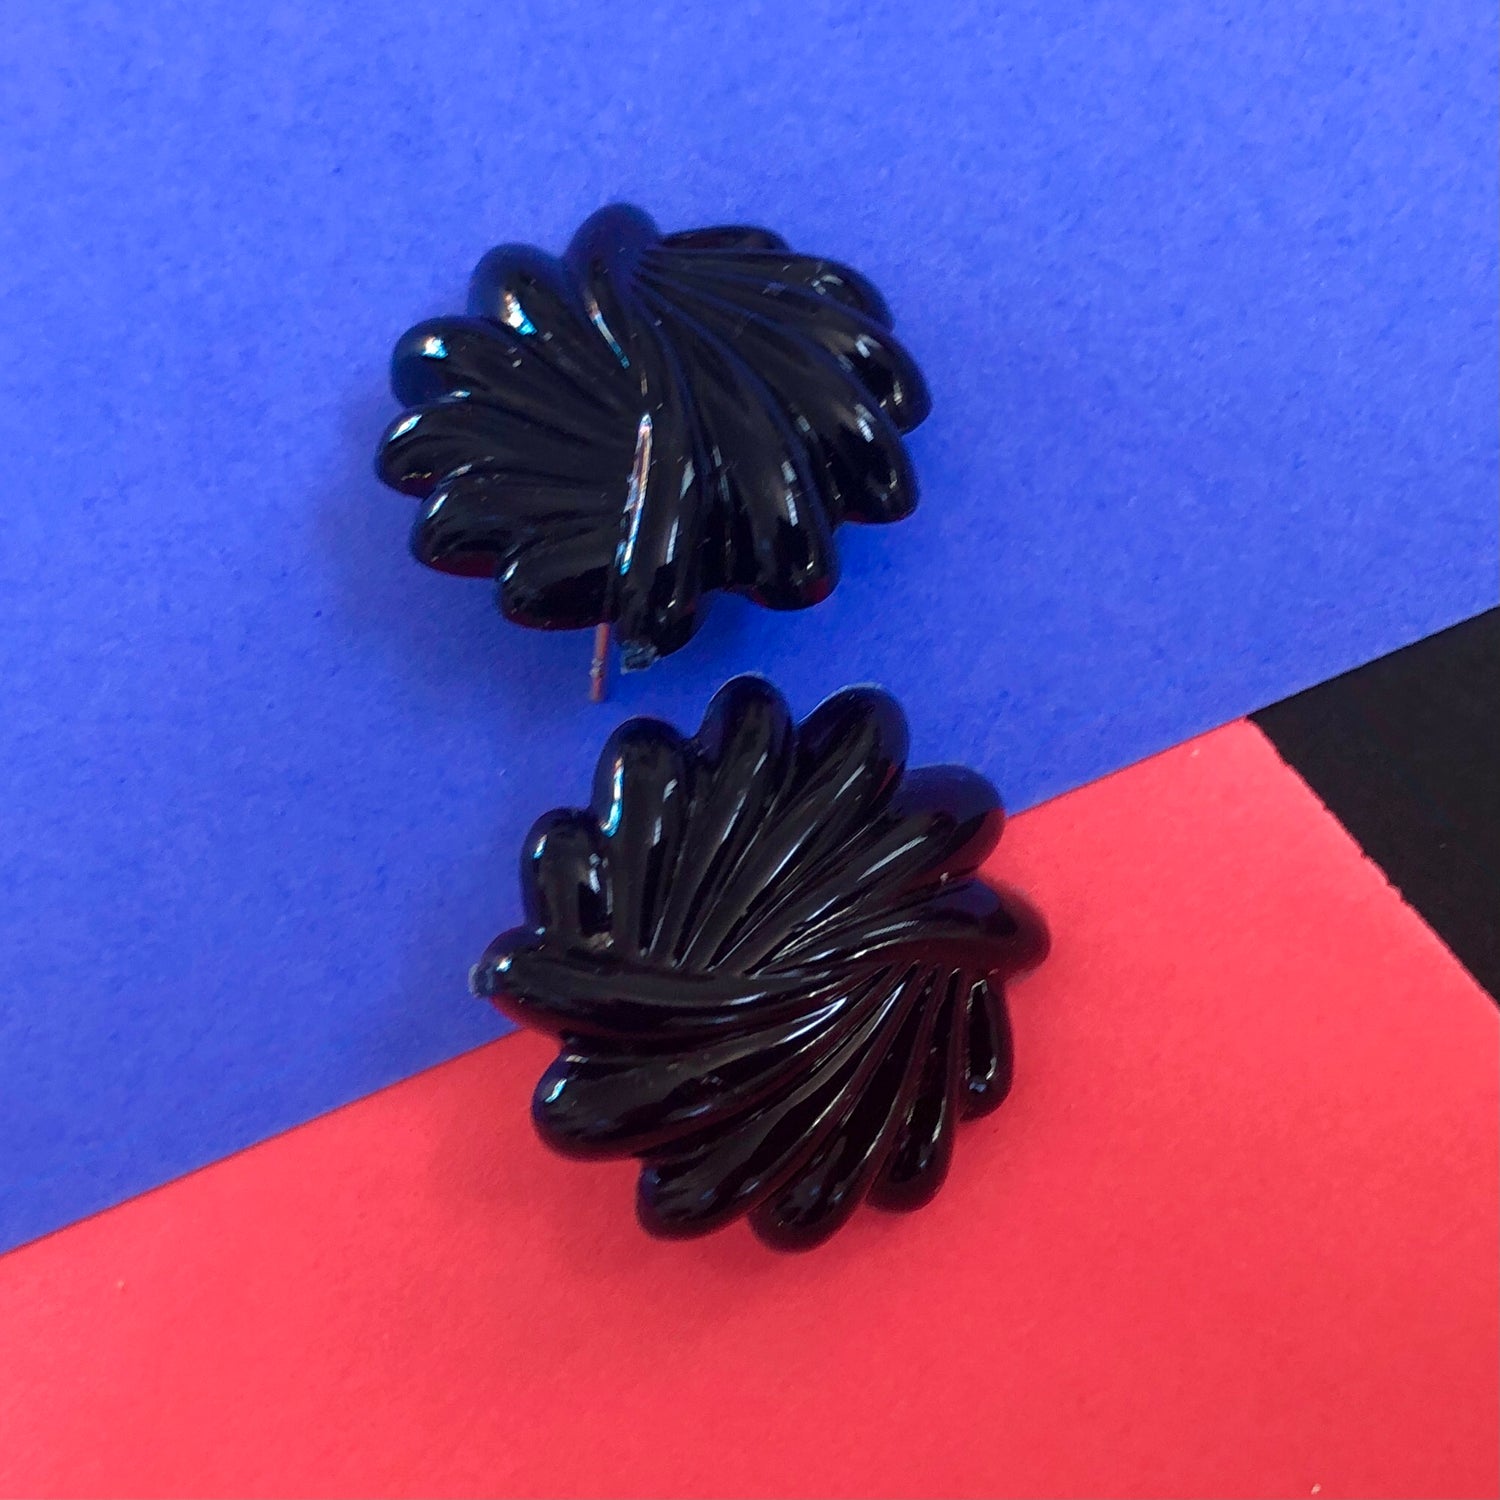 Black Art Deco Carved Retro Button Stud Earrings